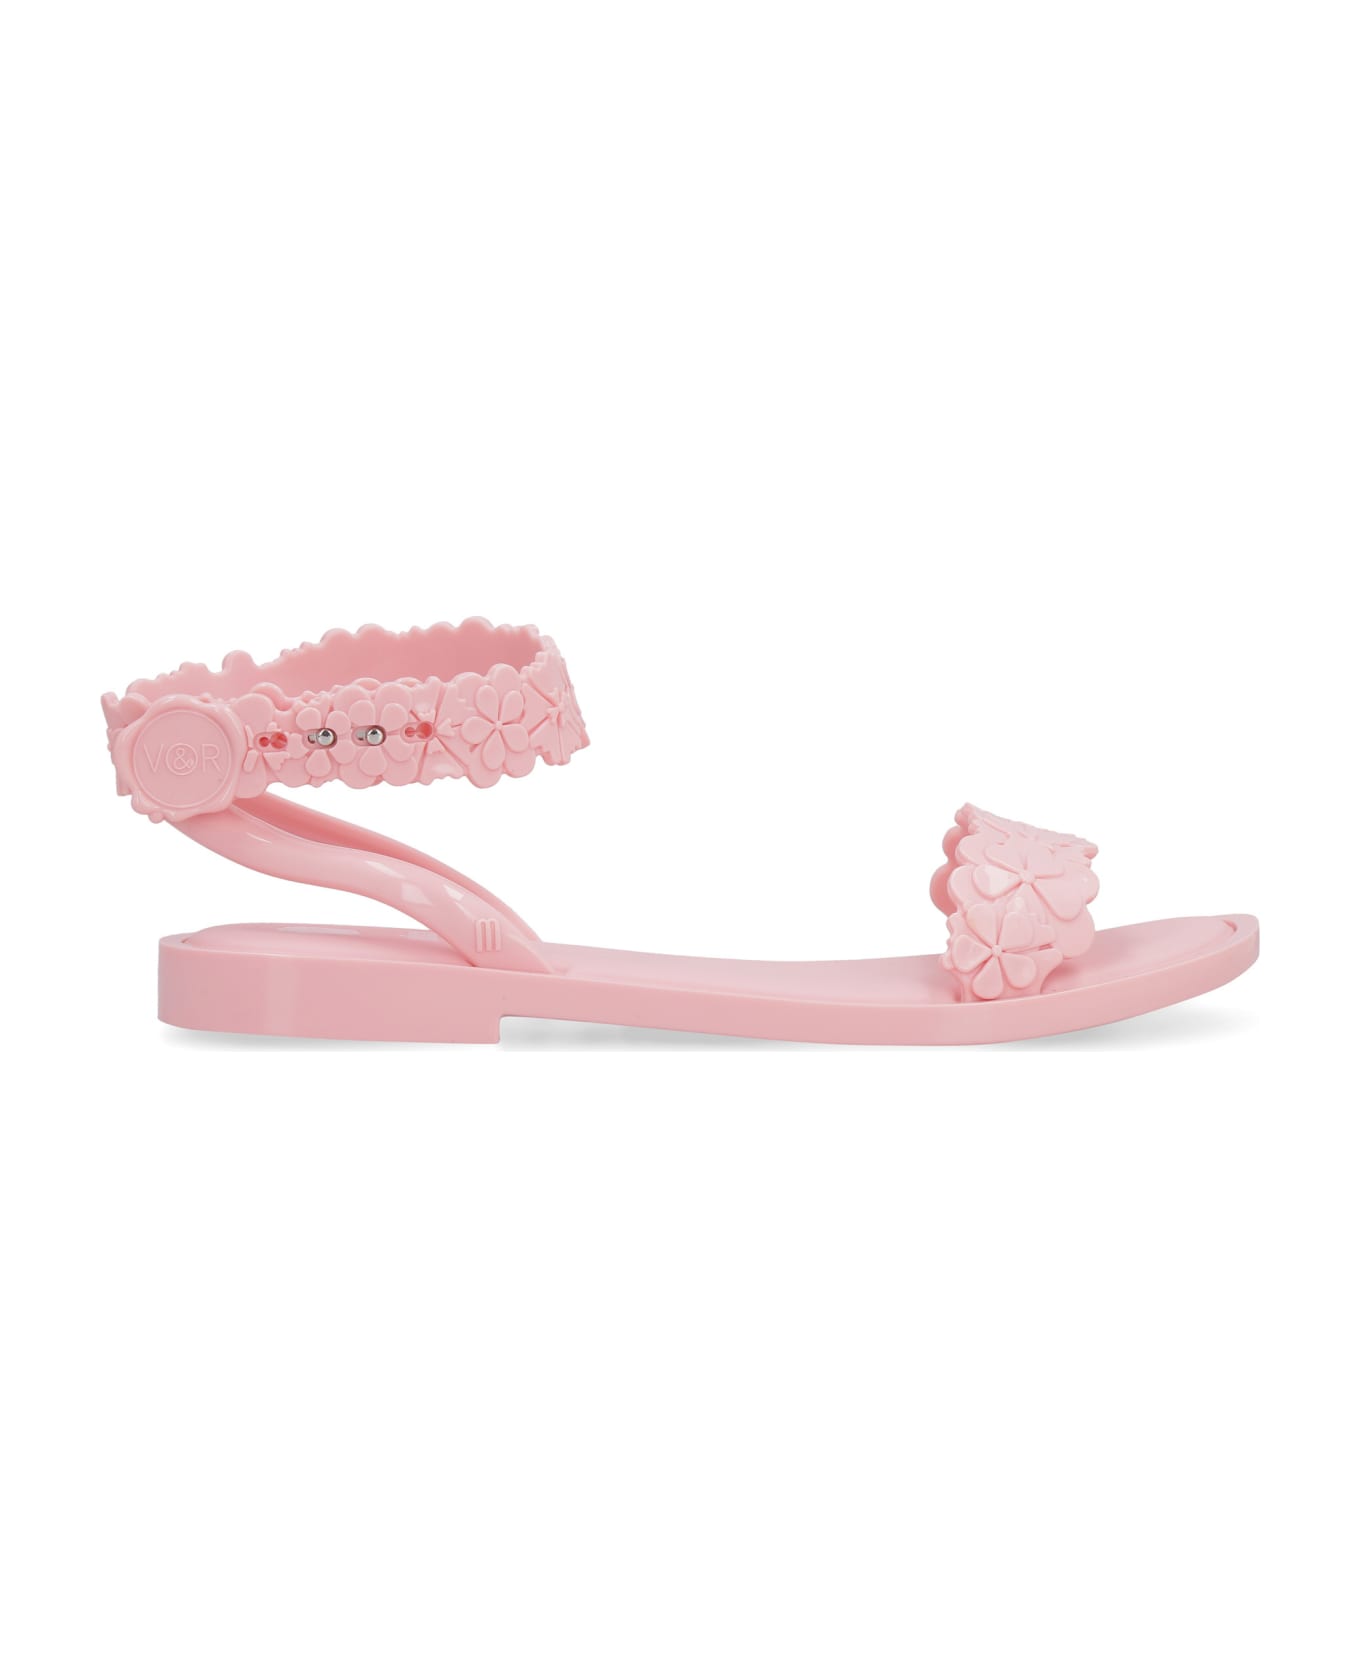 Melissa Viktor&rolf X Melissa - Blossom Wave Sandals - Pink